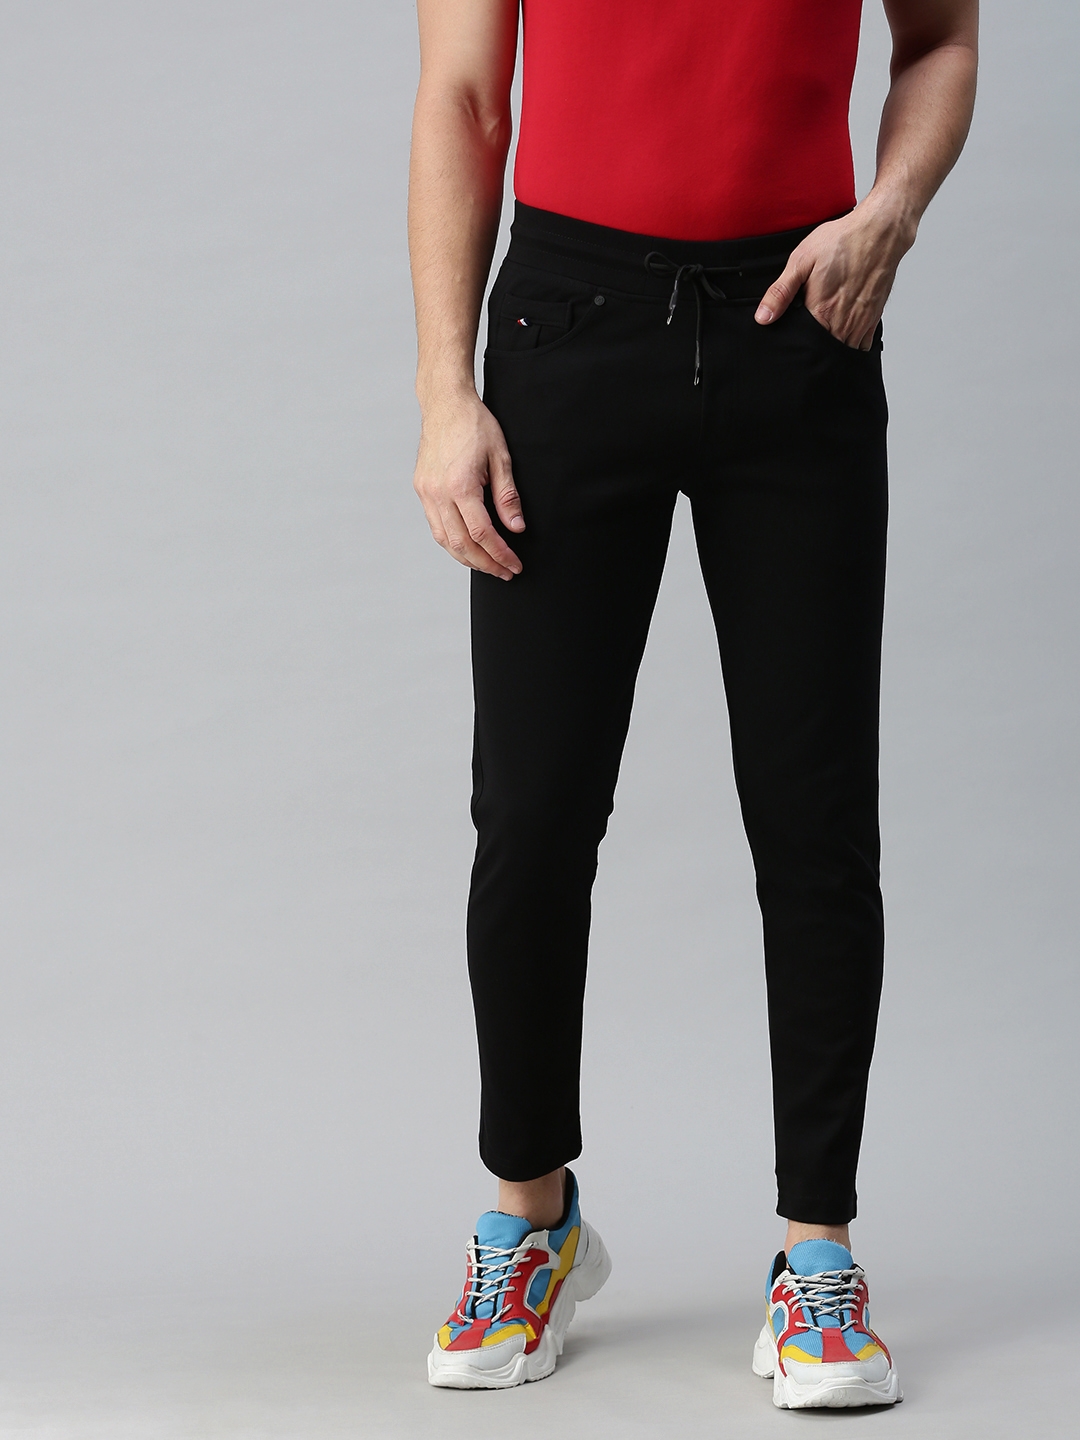 Buy Black Track Pants for Women by PerfktU Online  Ajiocom